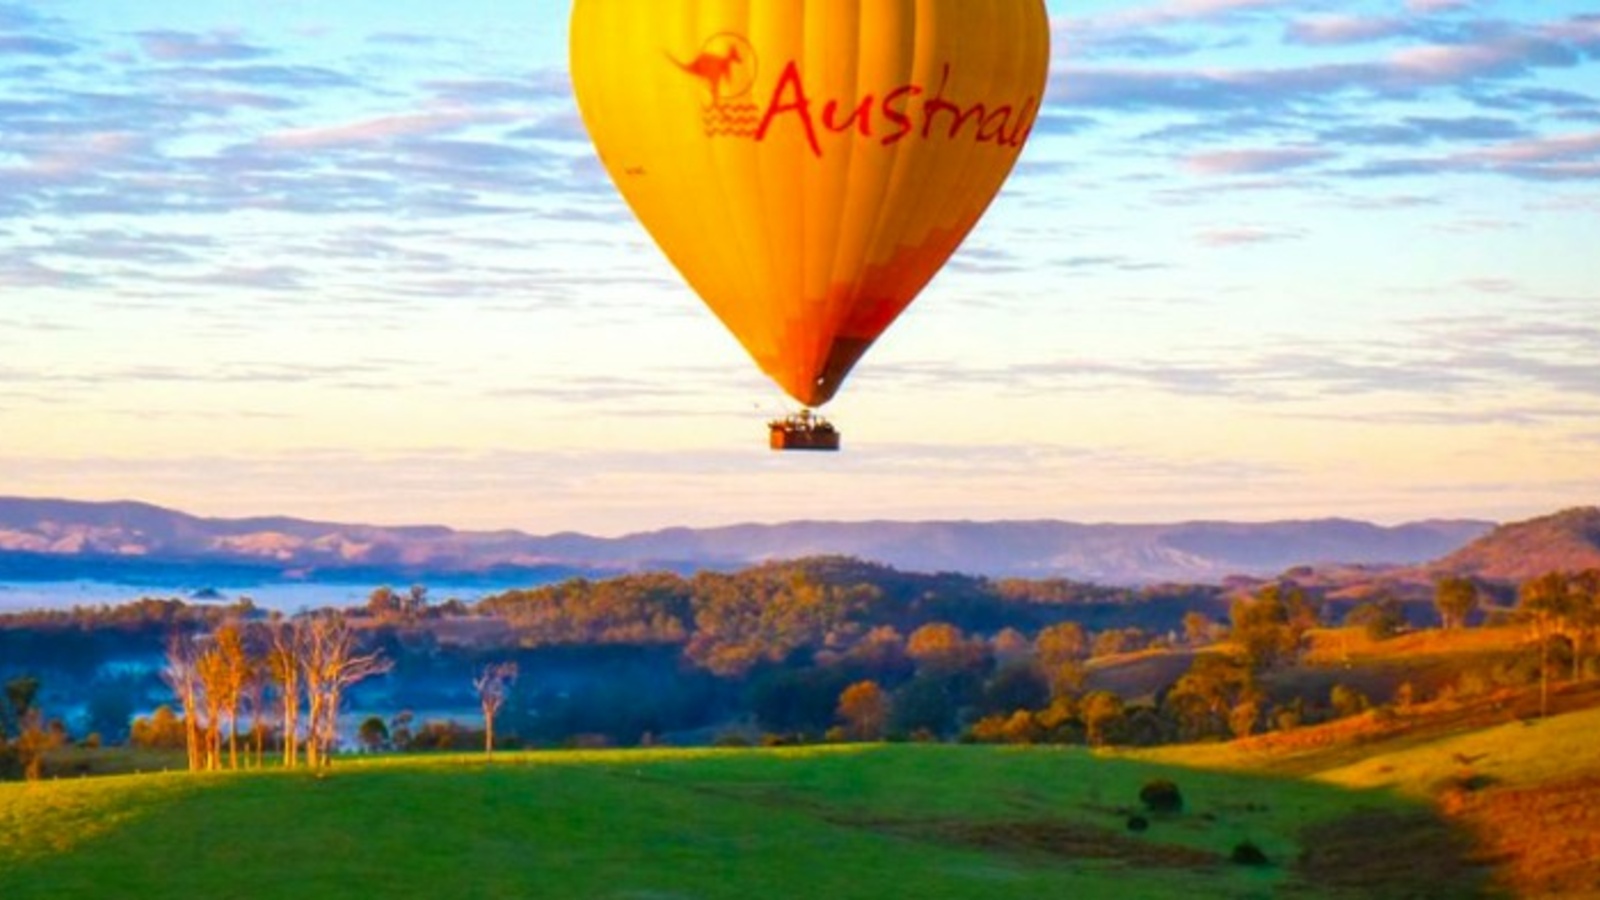 Hot-Air-Balloon-in-Scenic-Rim-Queensland-Australia-2-1024x393.jpg